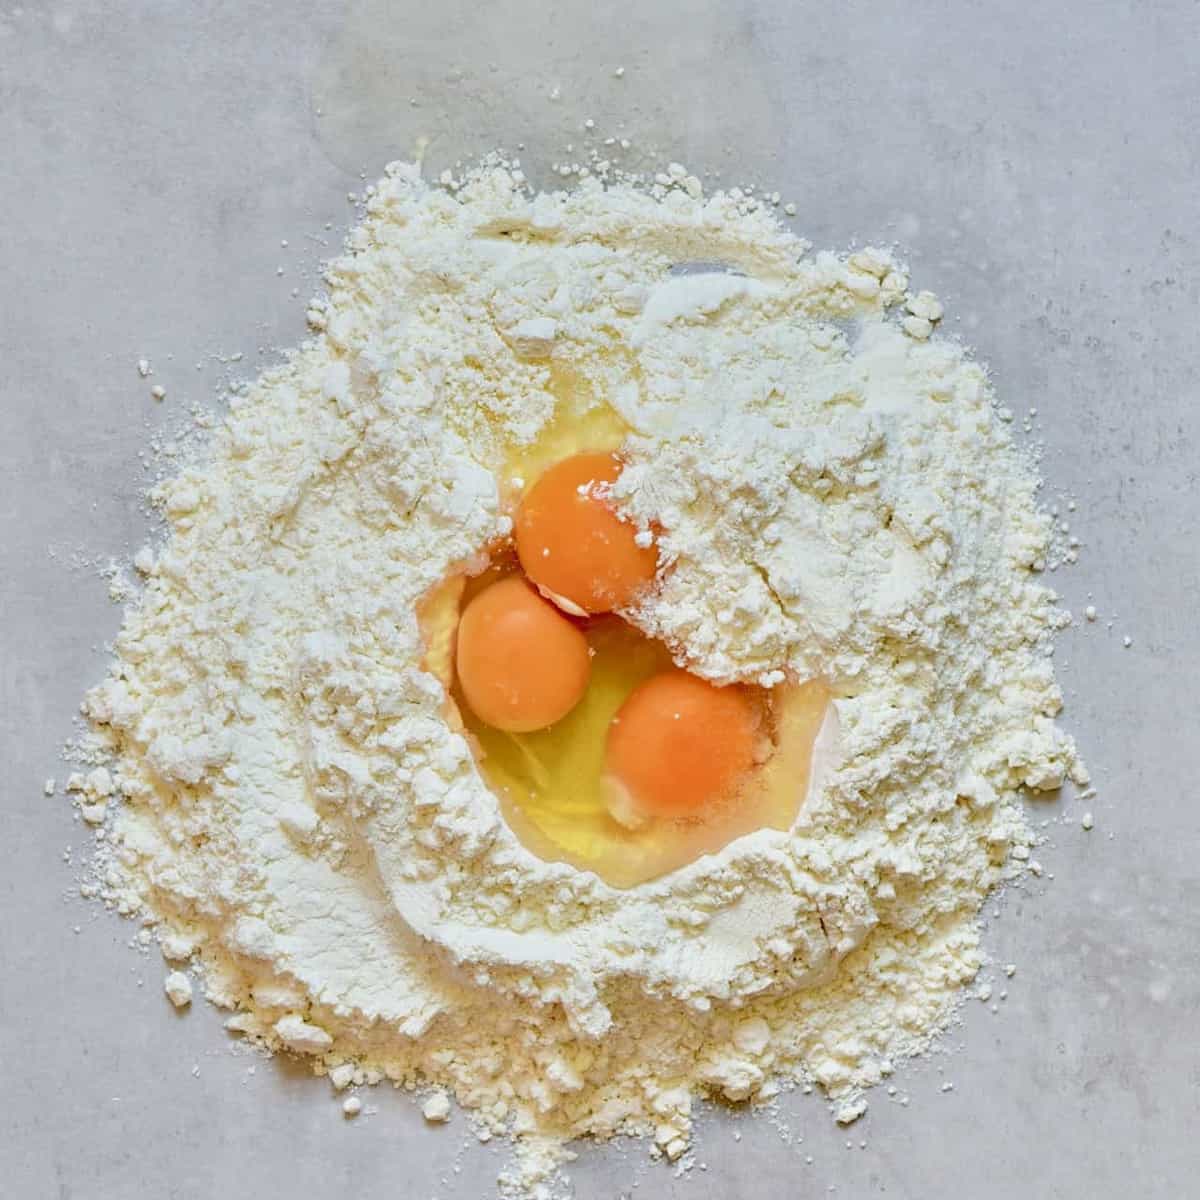 Flour and eggs for homemade pasta